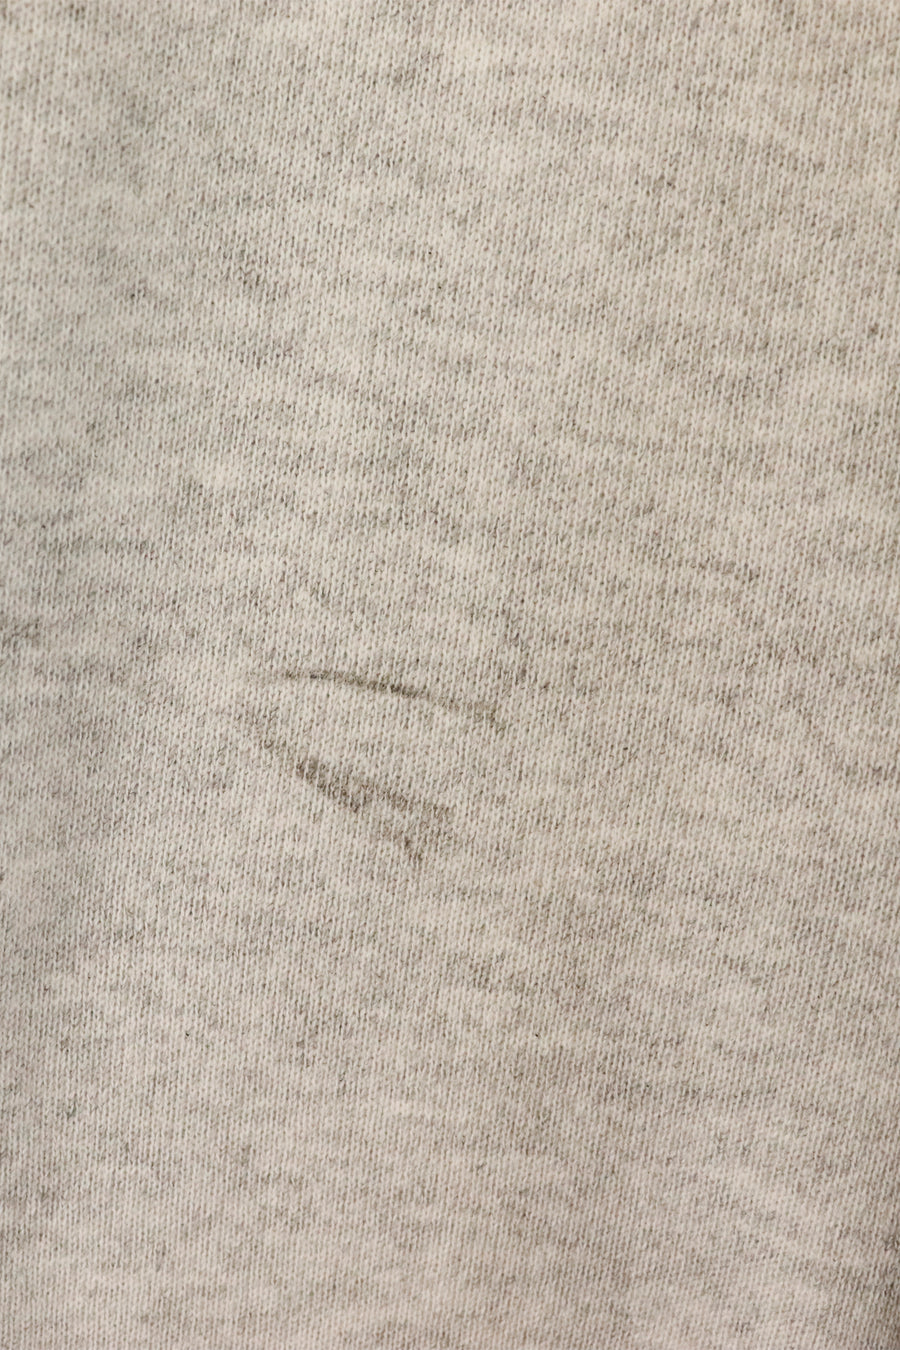 Vintage Penn State Athletics XXL Puffy Vinyl Large Navy Font With White Outlining Sweatshirt Sz L